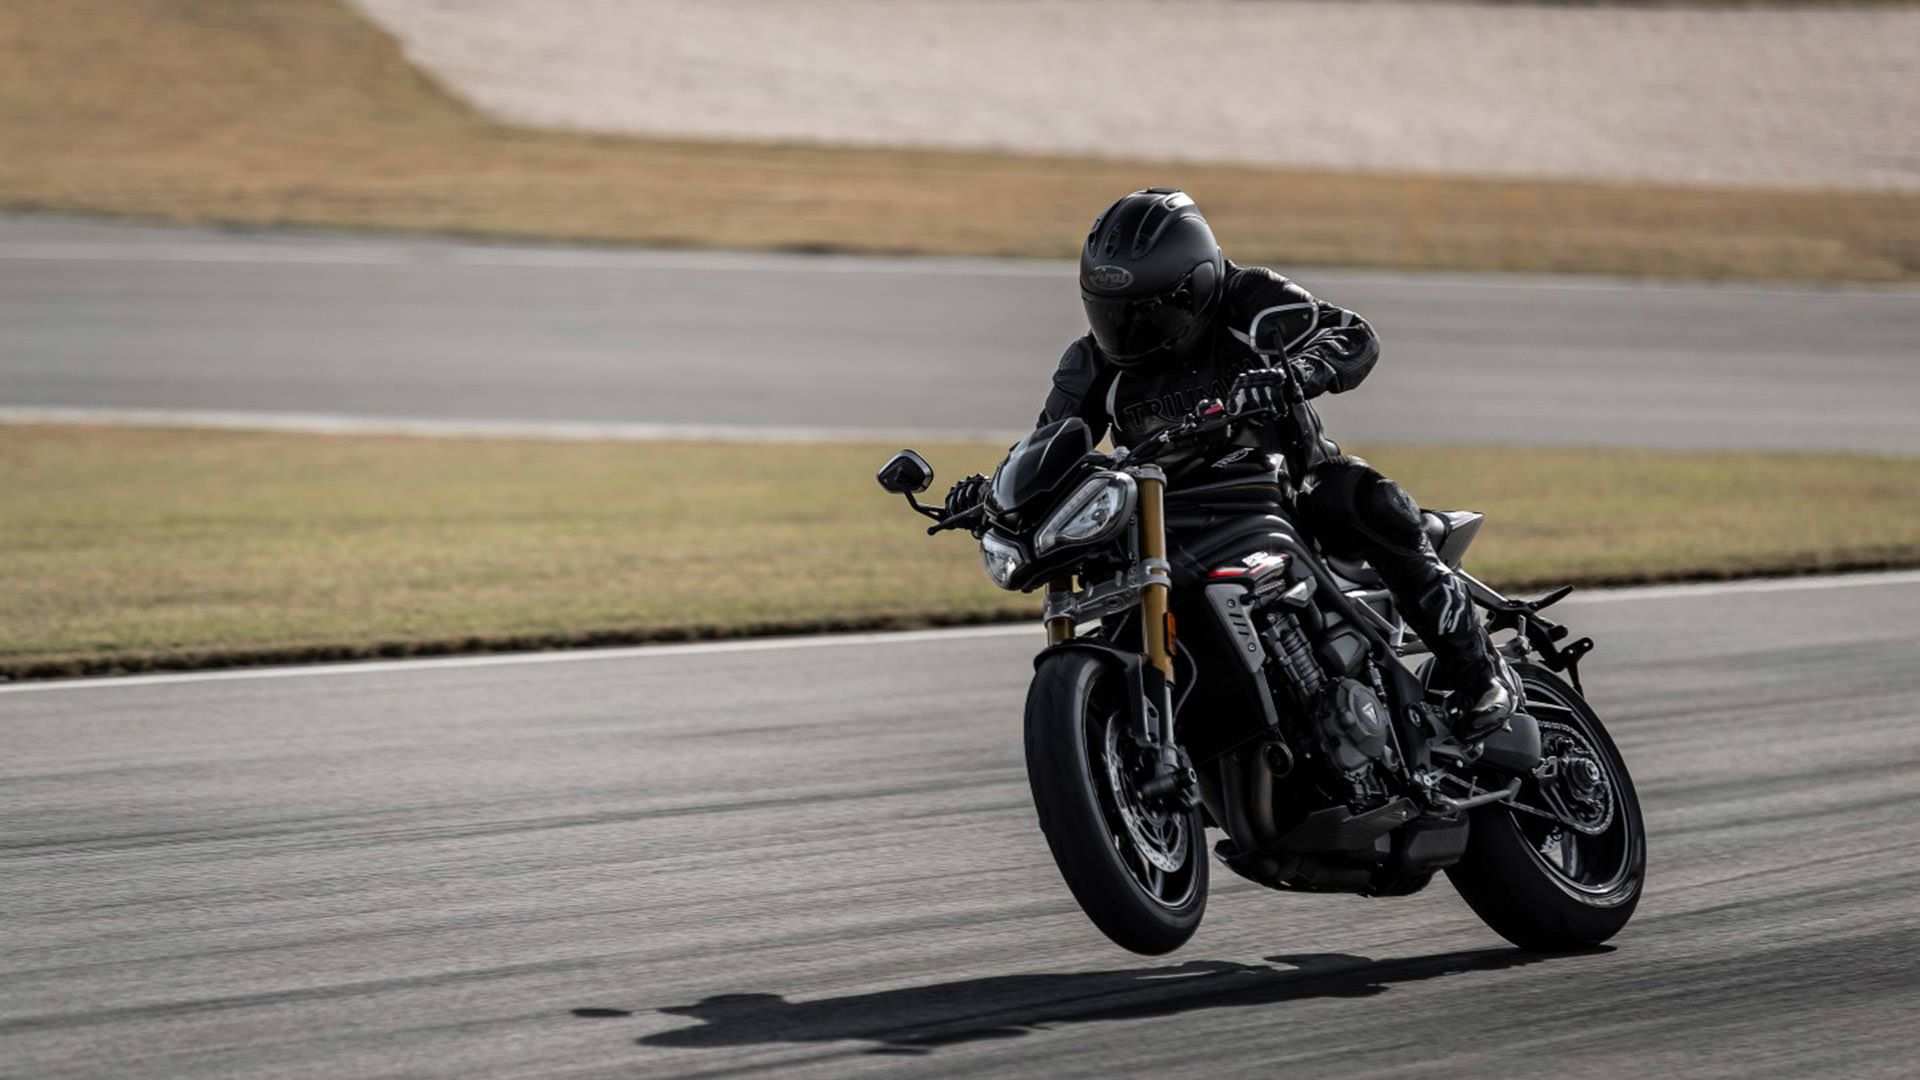 موتورسیکلت تریومف اسپید تریپل 1200 آر اس / Triumph Speed Triple 1200 RS 2021 Motorcycle در پیست موتورسواری